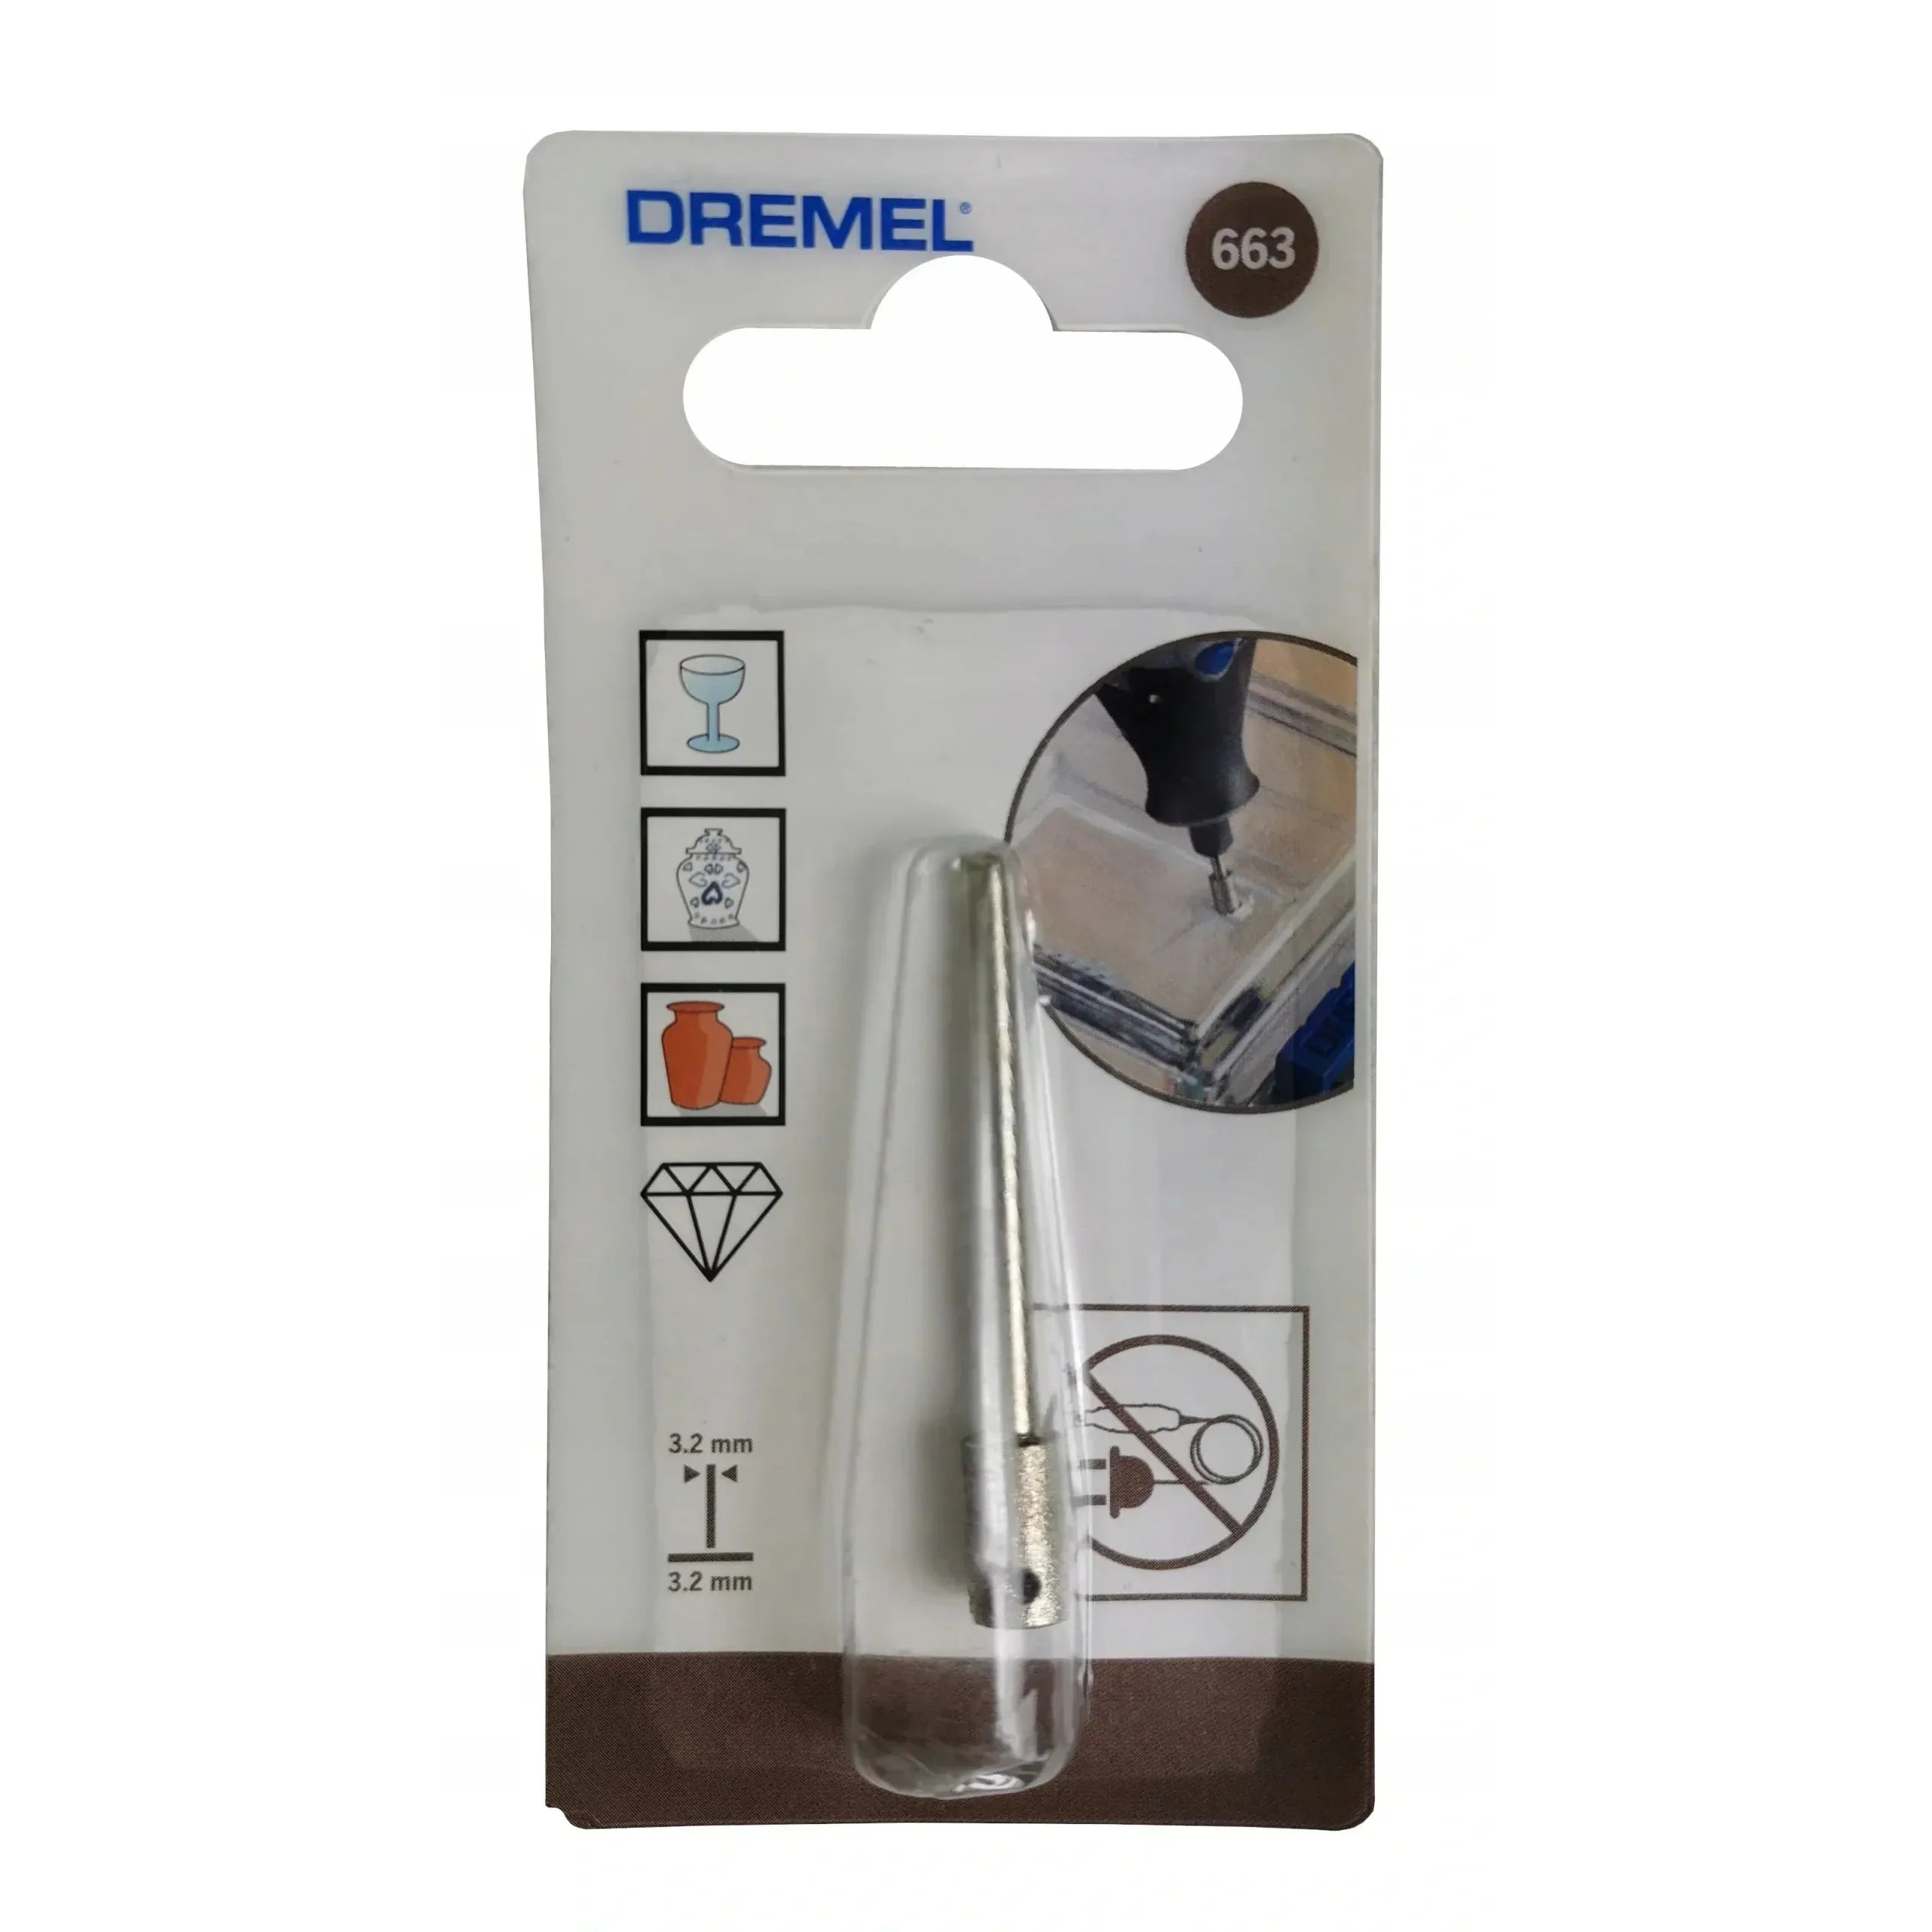 Dremel Glass Drilling Bit (663) Power Tool Services